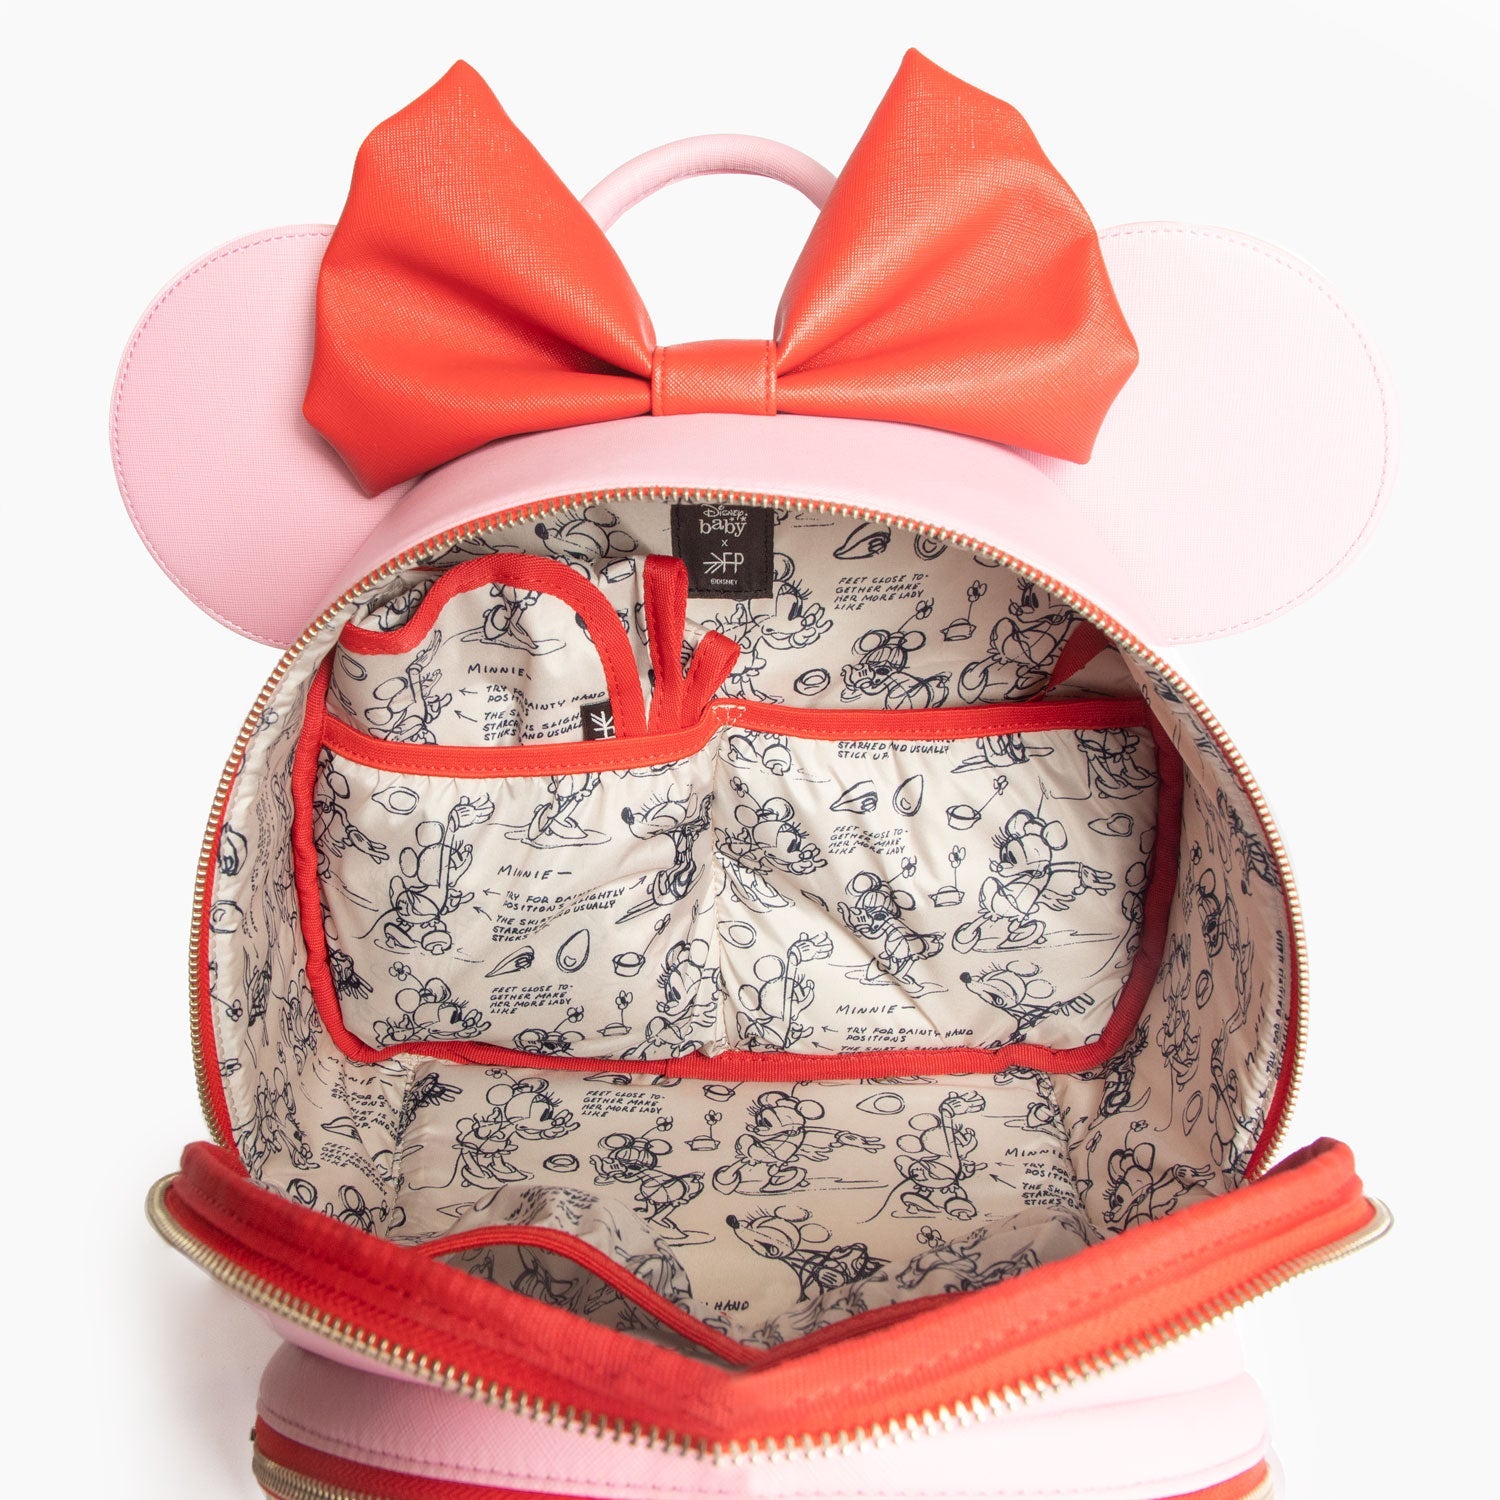 Minnie Anaheim Backpack Anaheim Backpack Diaper Bag 